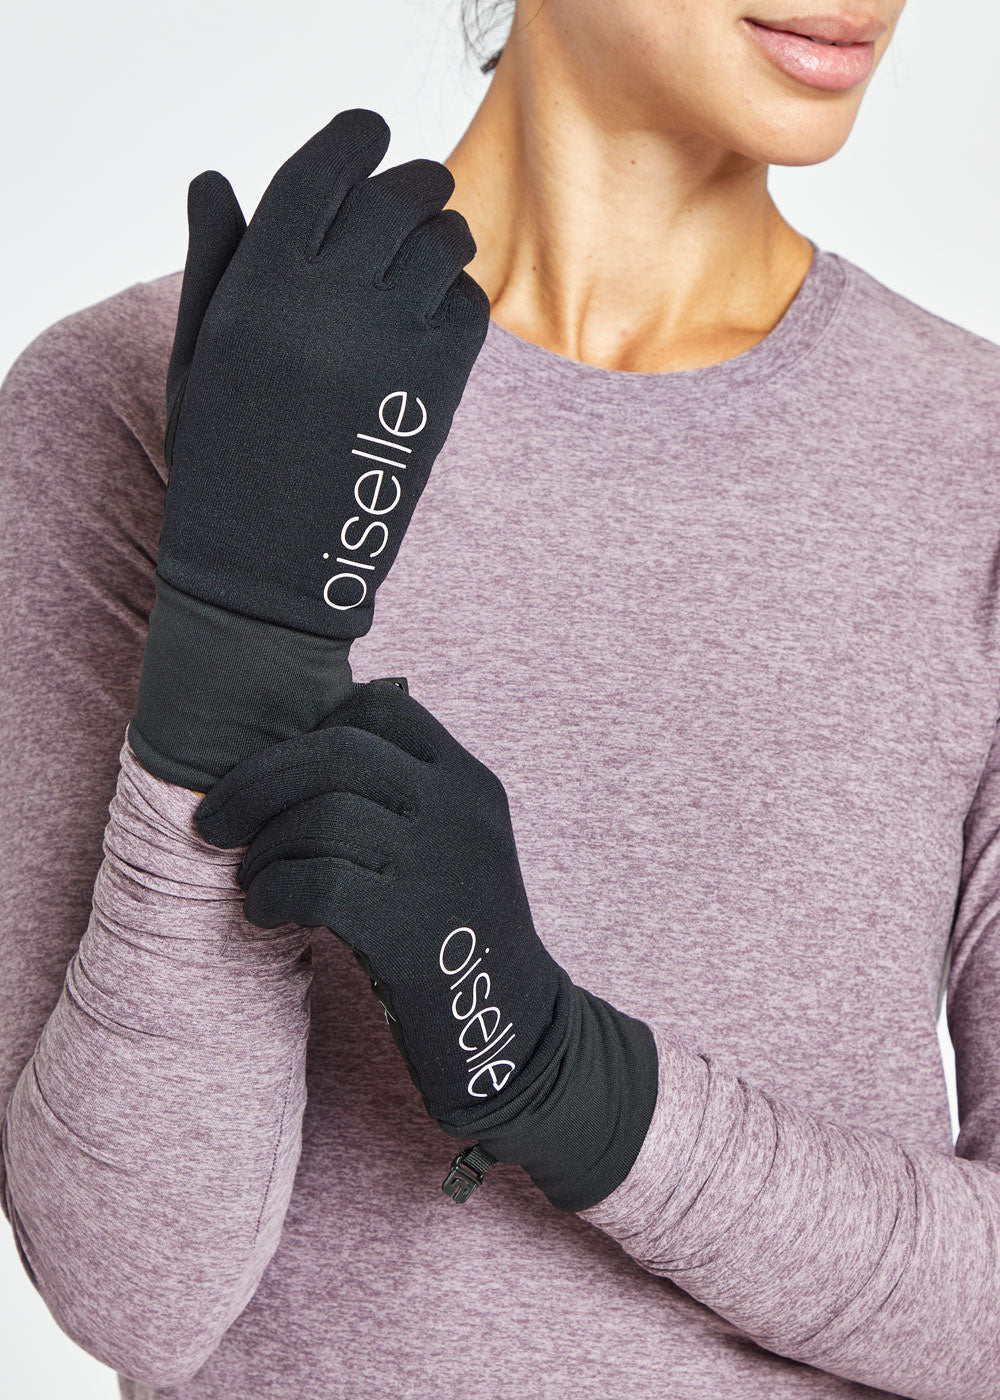 OISELLE – Power Gloves Move